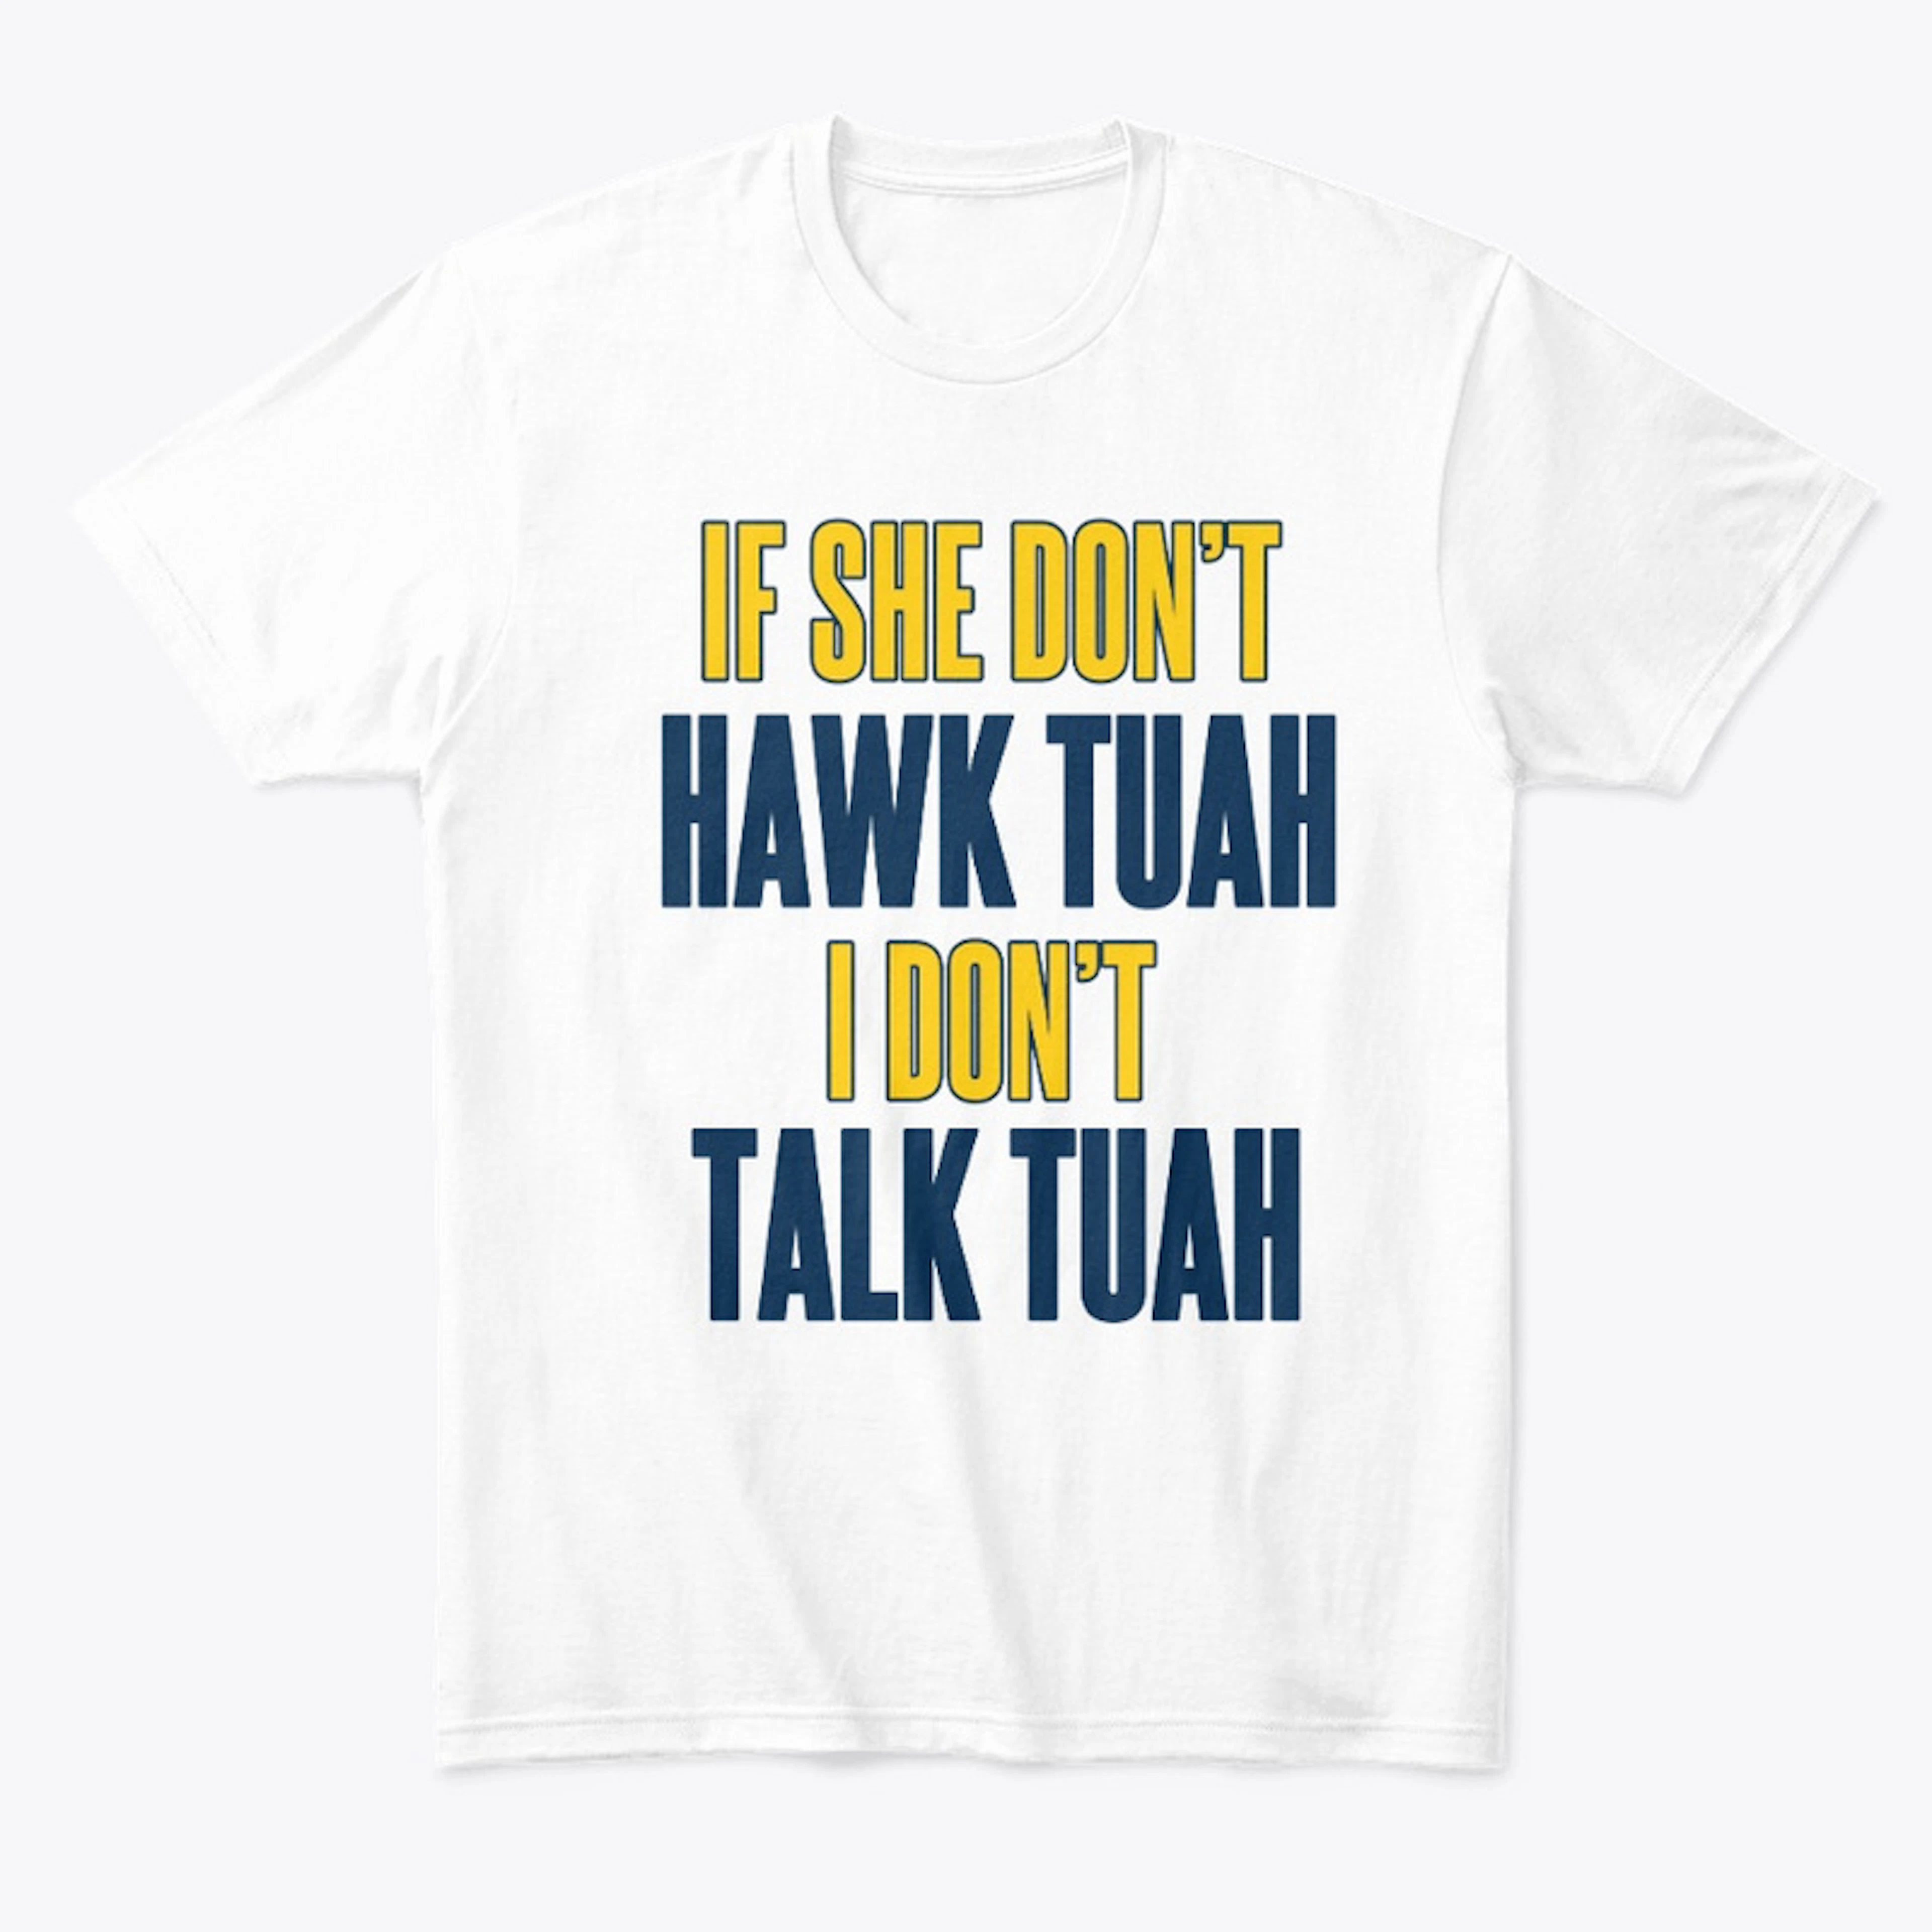 Hawk Tuah Tee, gold and midnight blue